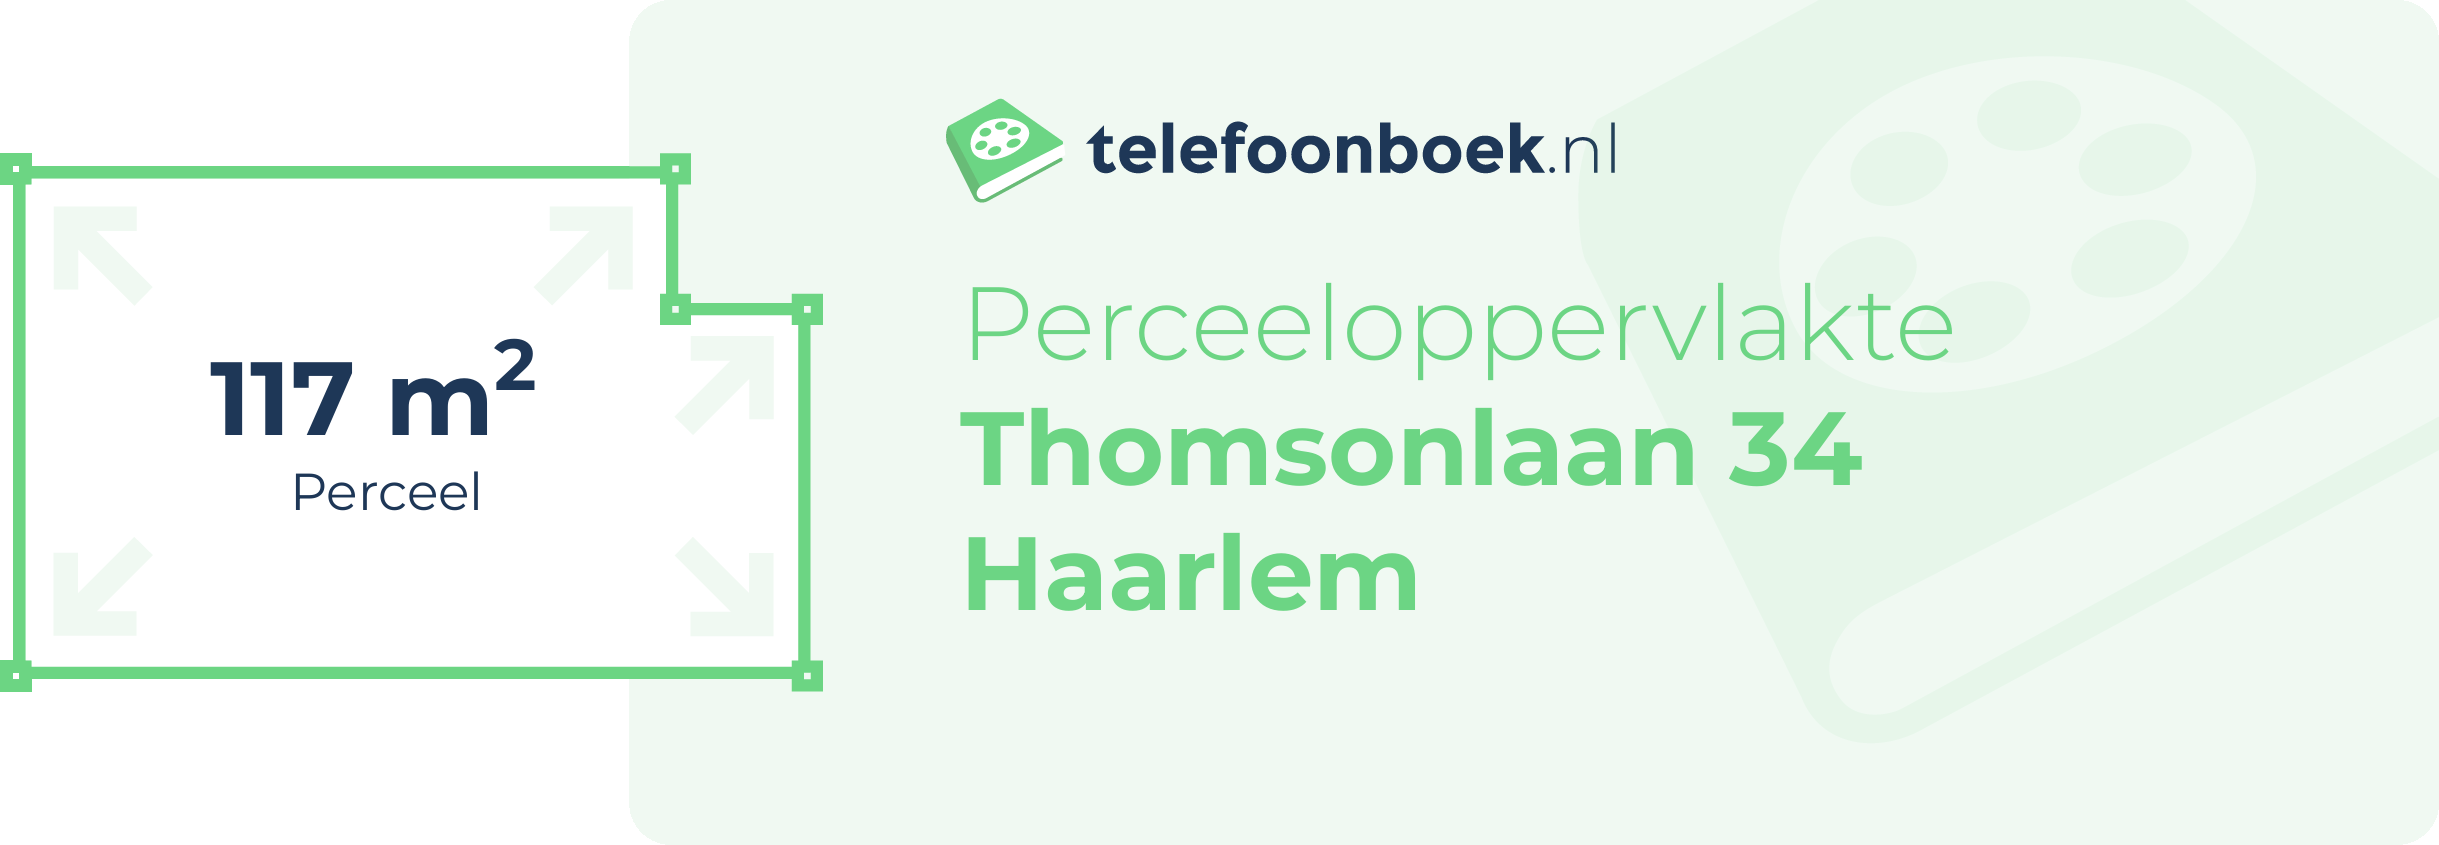 Perceeloppervlakte Thomsonlaan 34 Haarlem